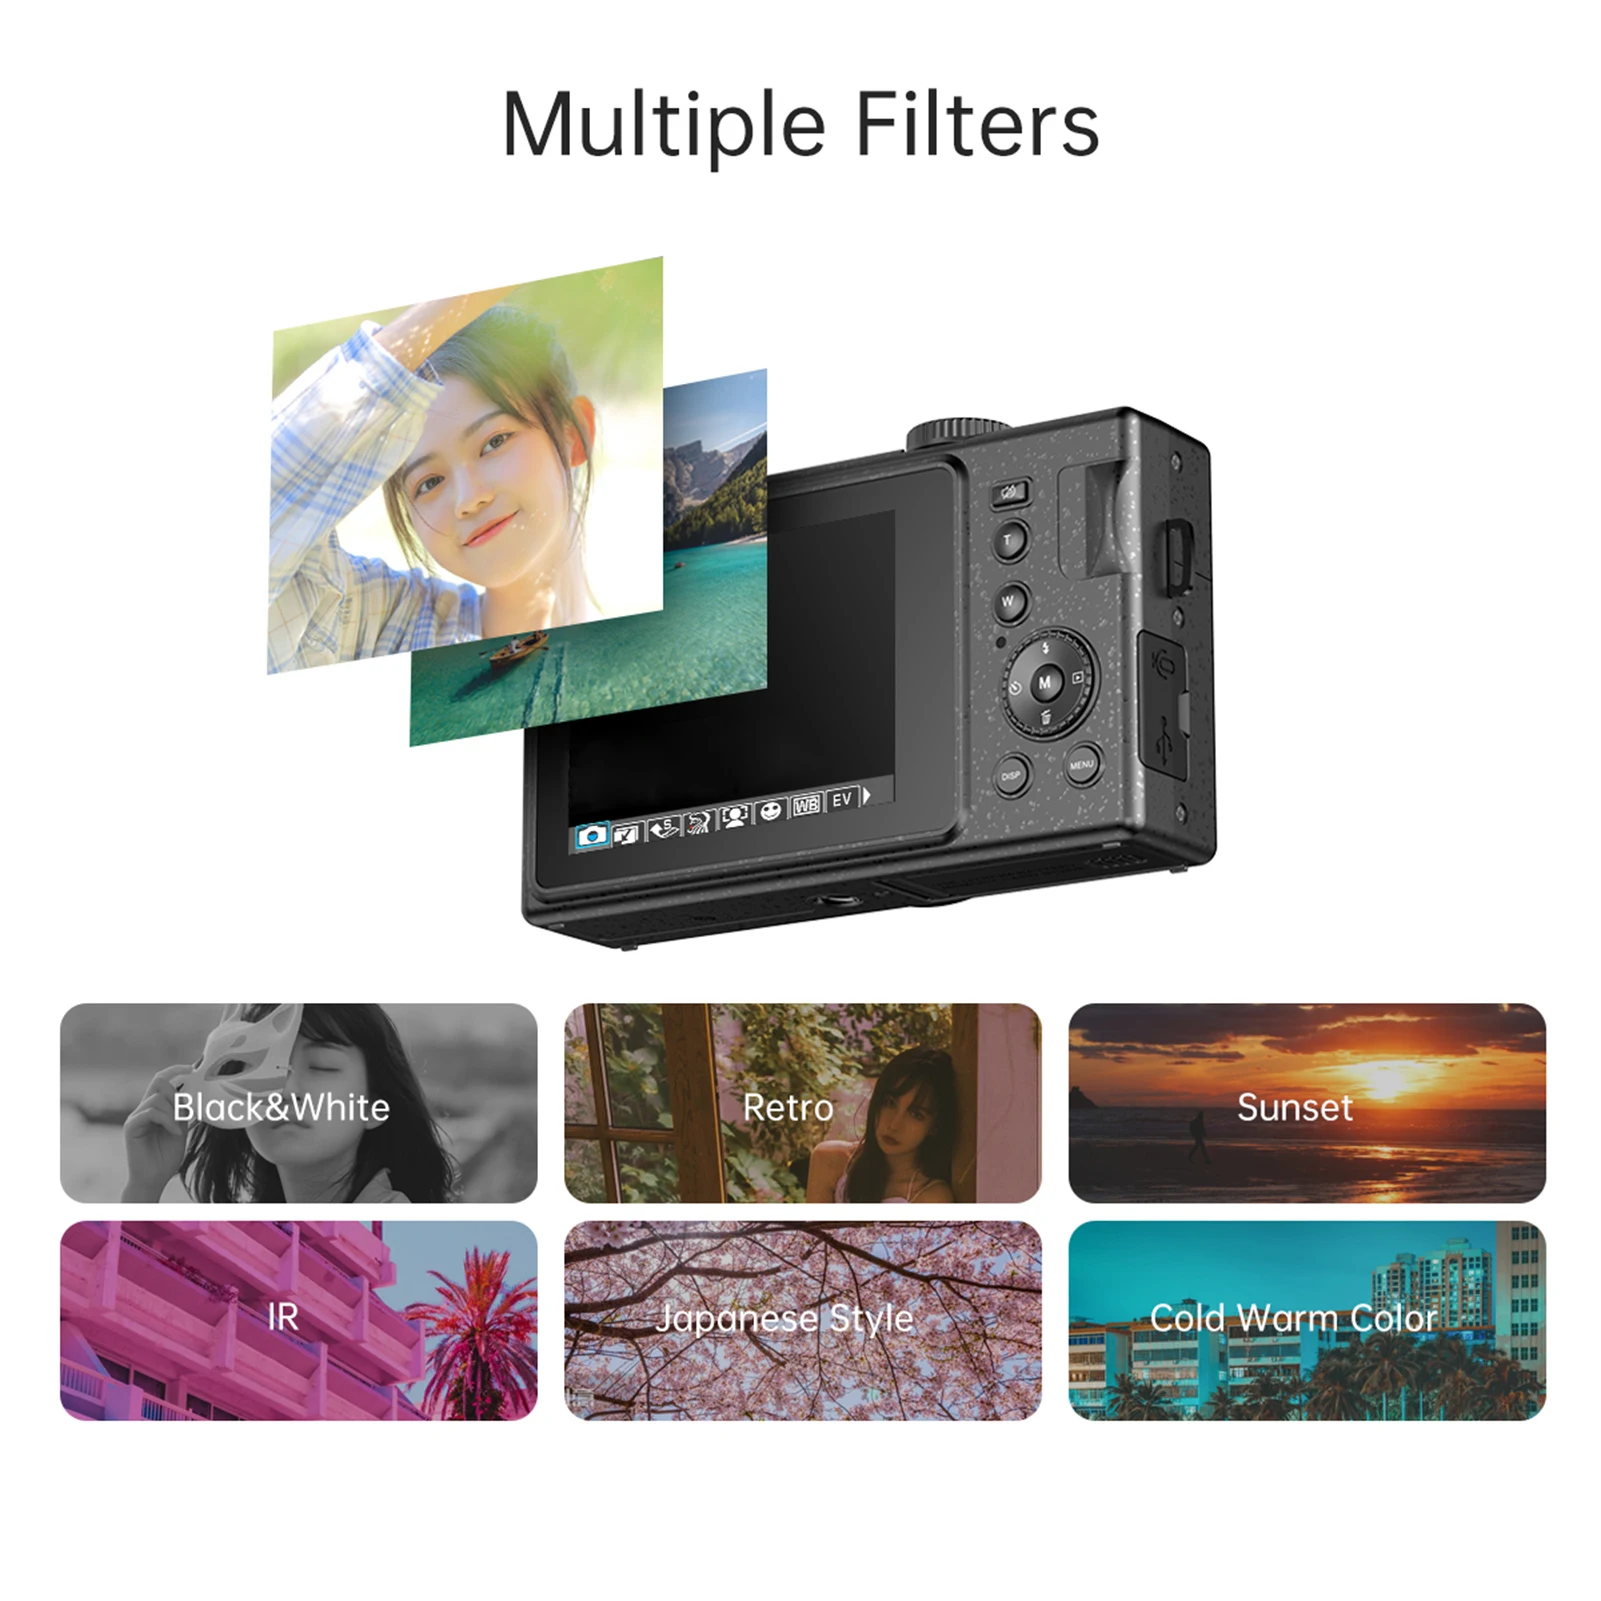 Andoer 1080P Digital Camera Video Camcorder 48MP 3.0 Inch Auto Focus 16X Digital Zoom with Selfie Flash Mirror for Kids Teens